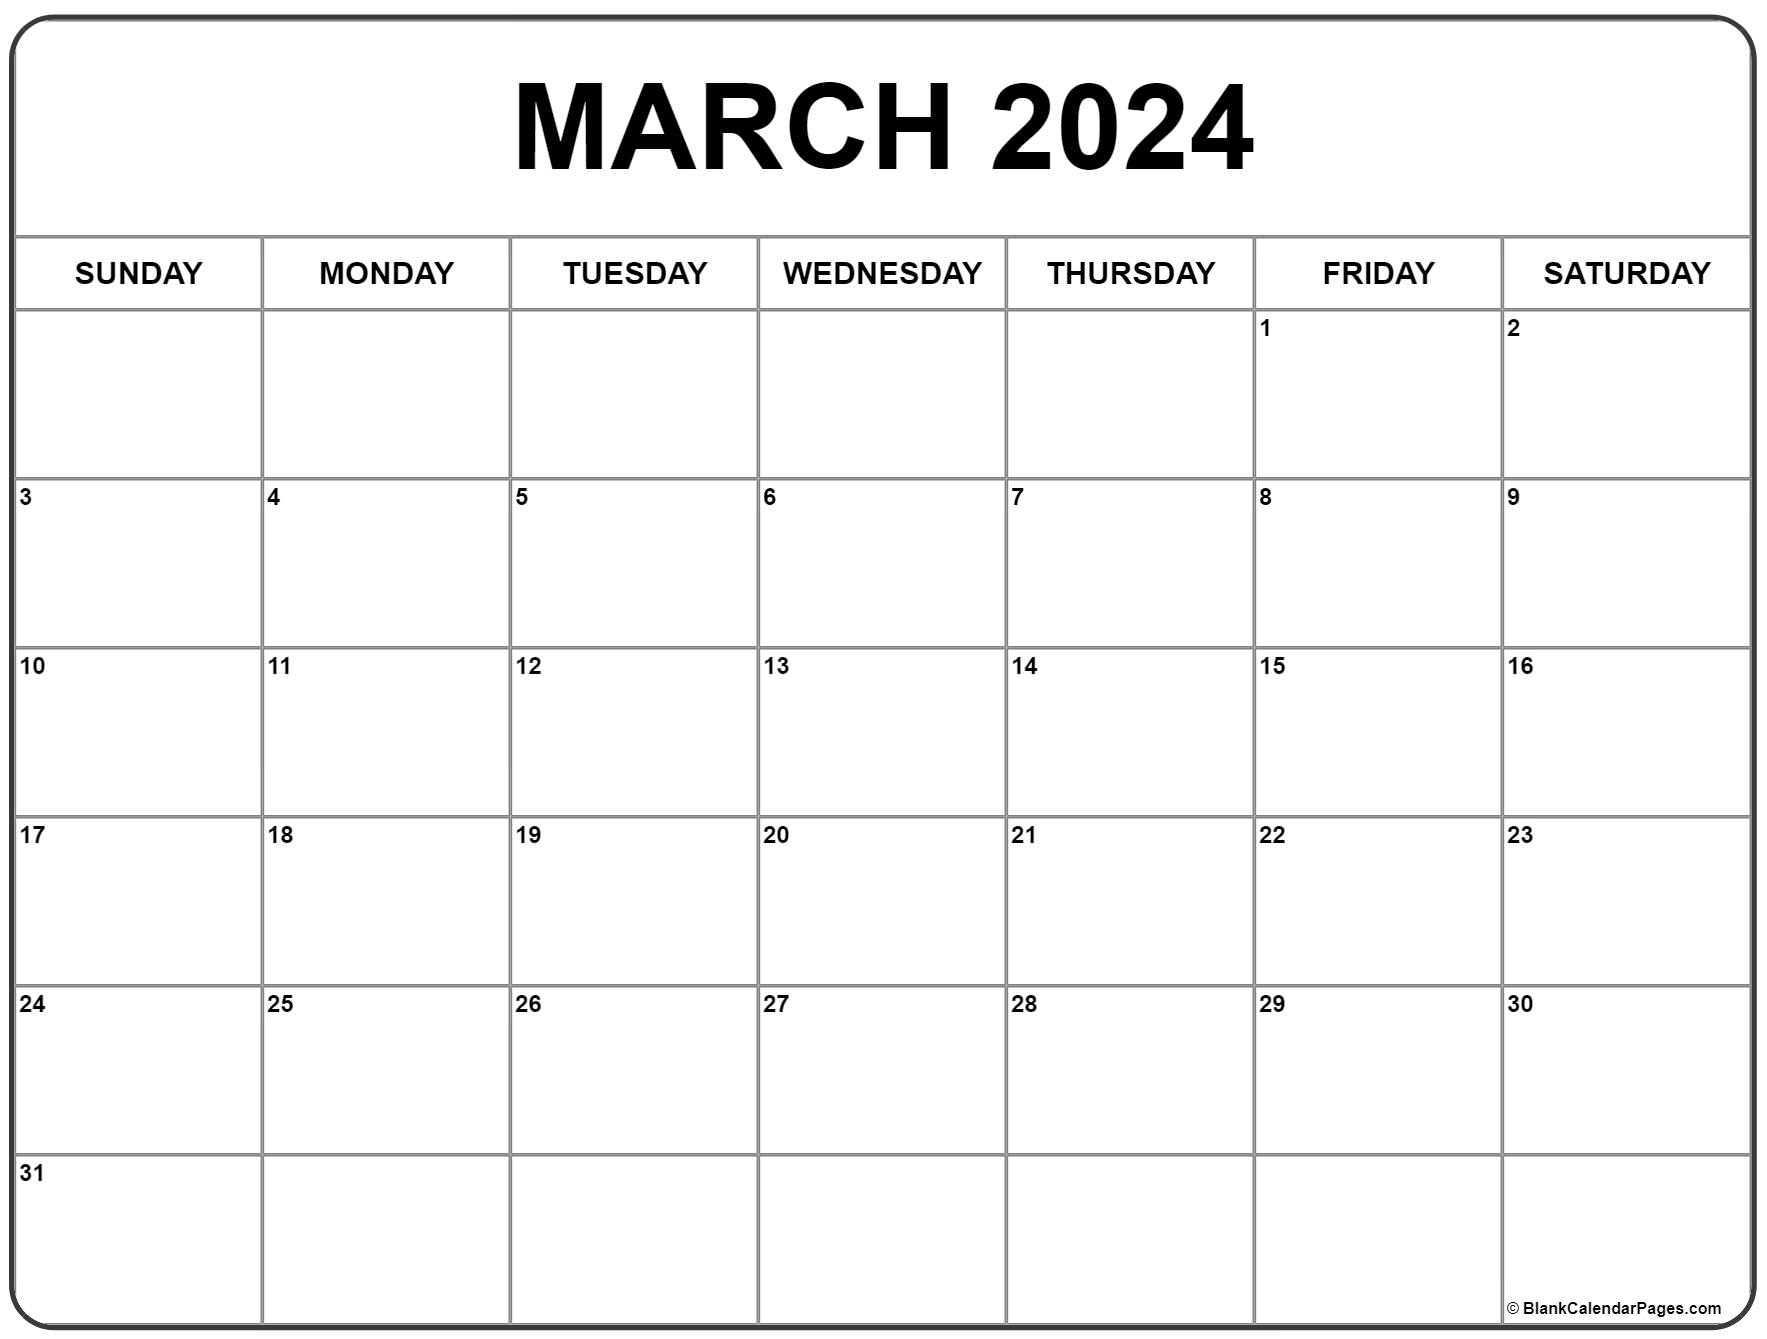 March 2024 Calendar | Free Printable Calendar for Free Printable March 2024 Calendar